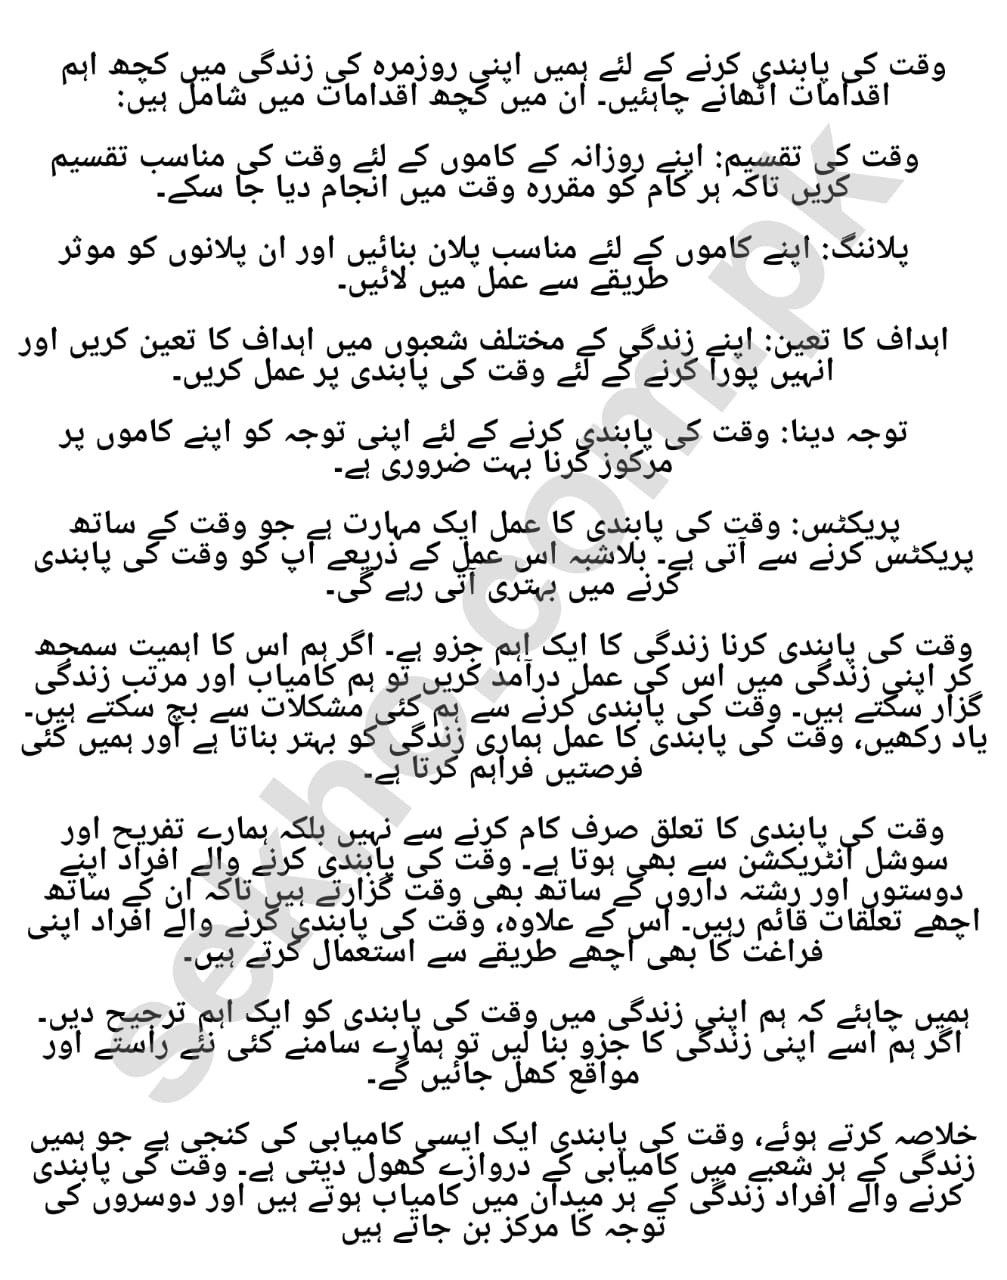 Waqt Ki Pabandi Essay in Urdu